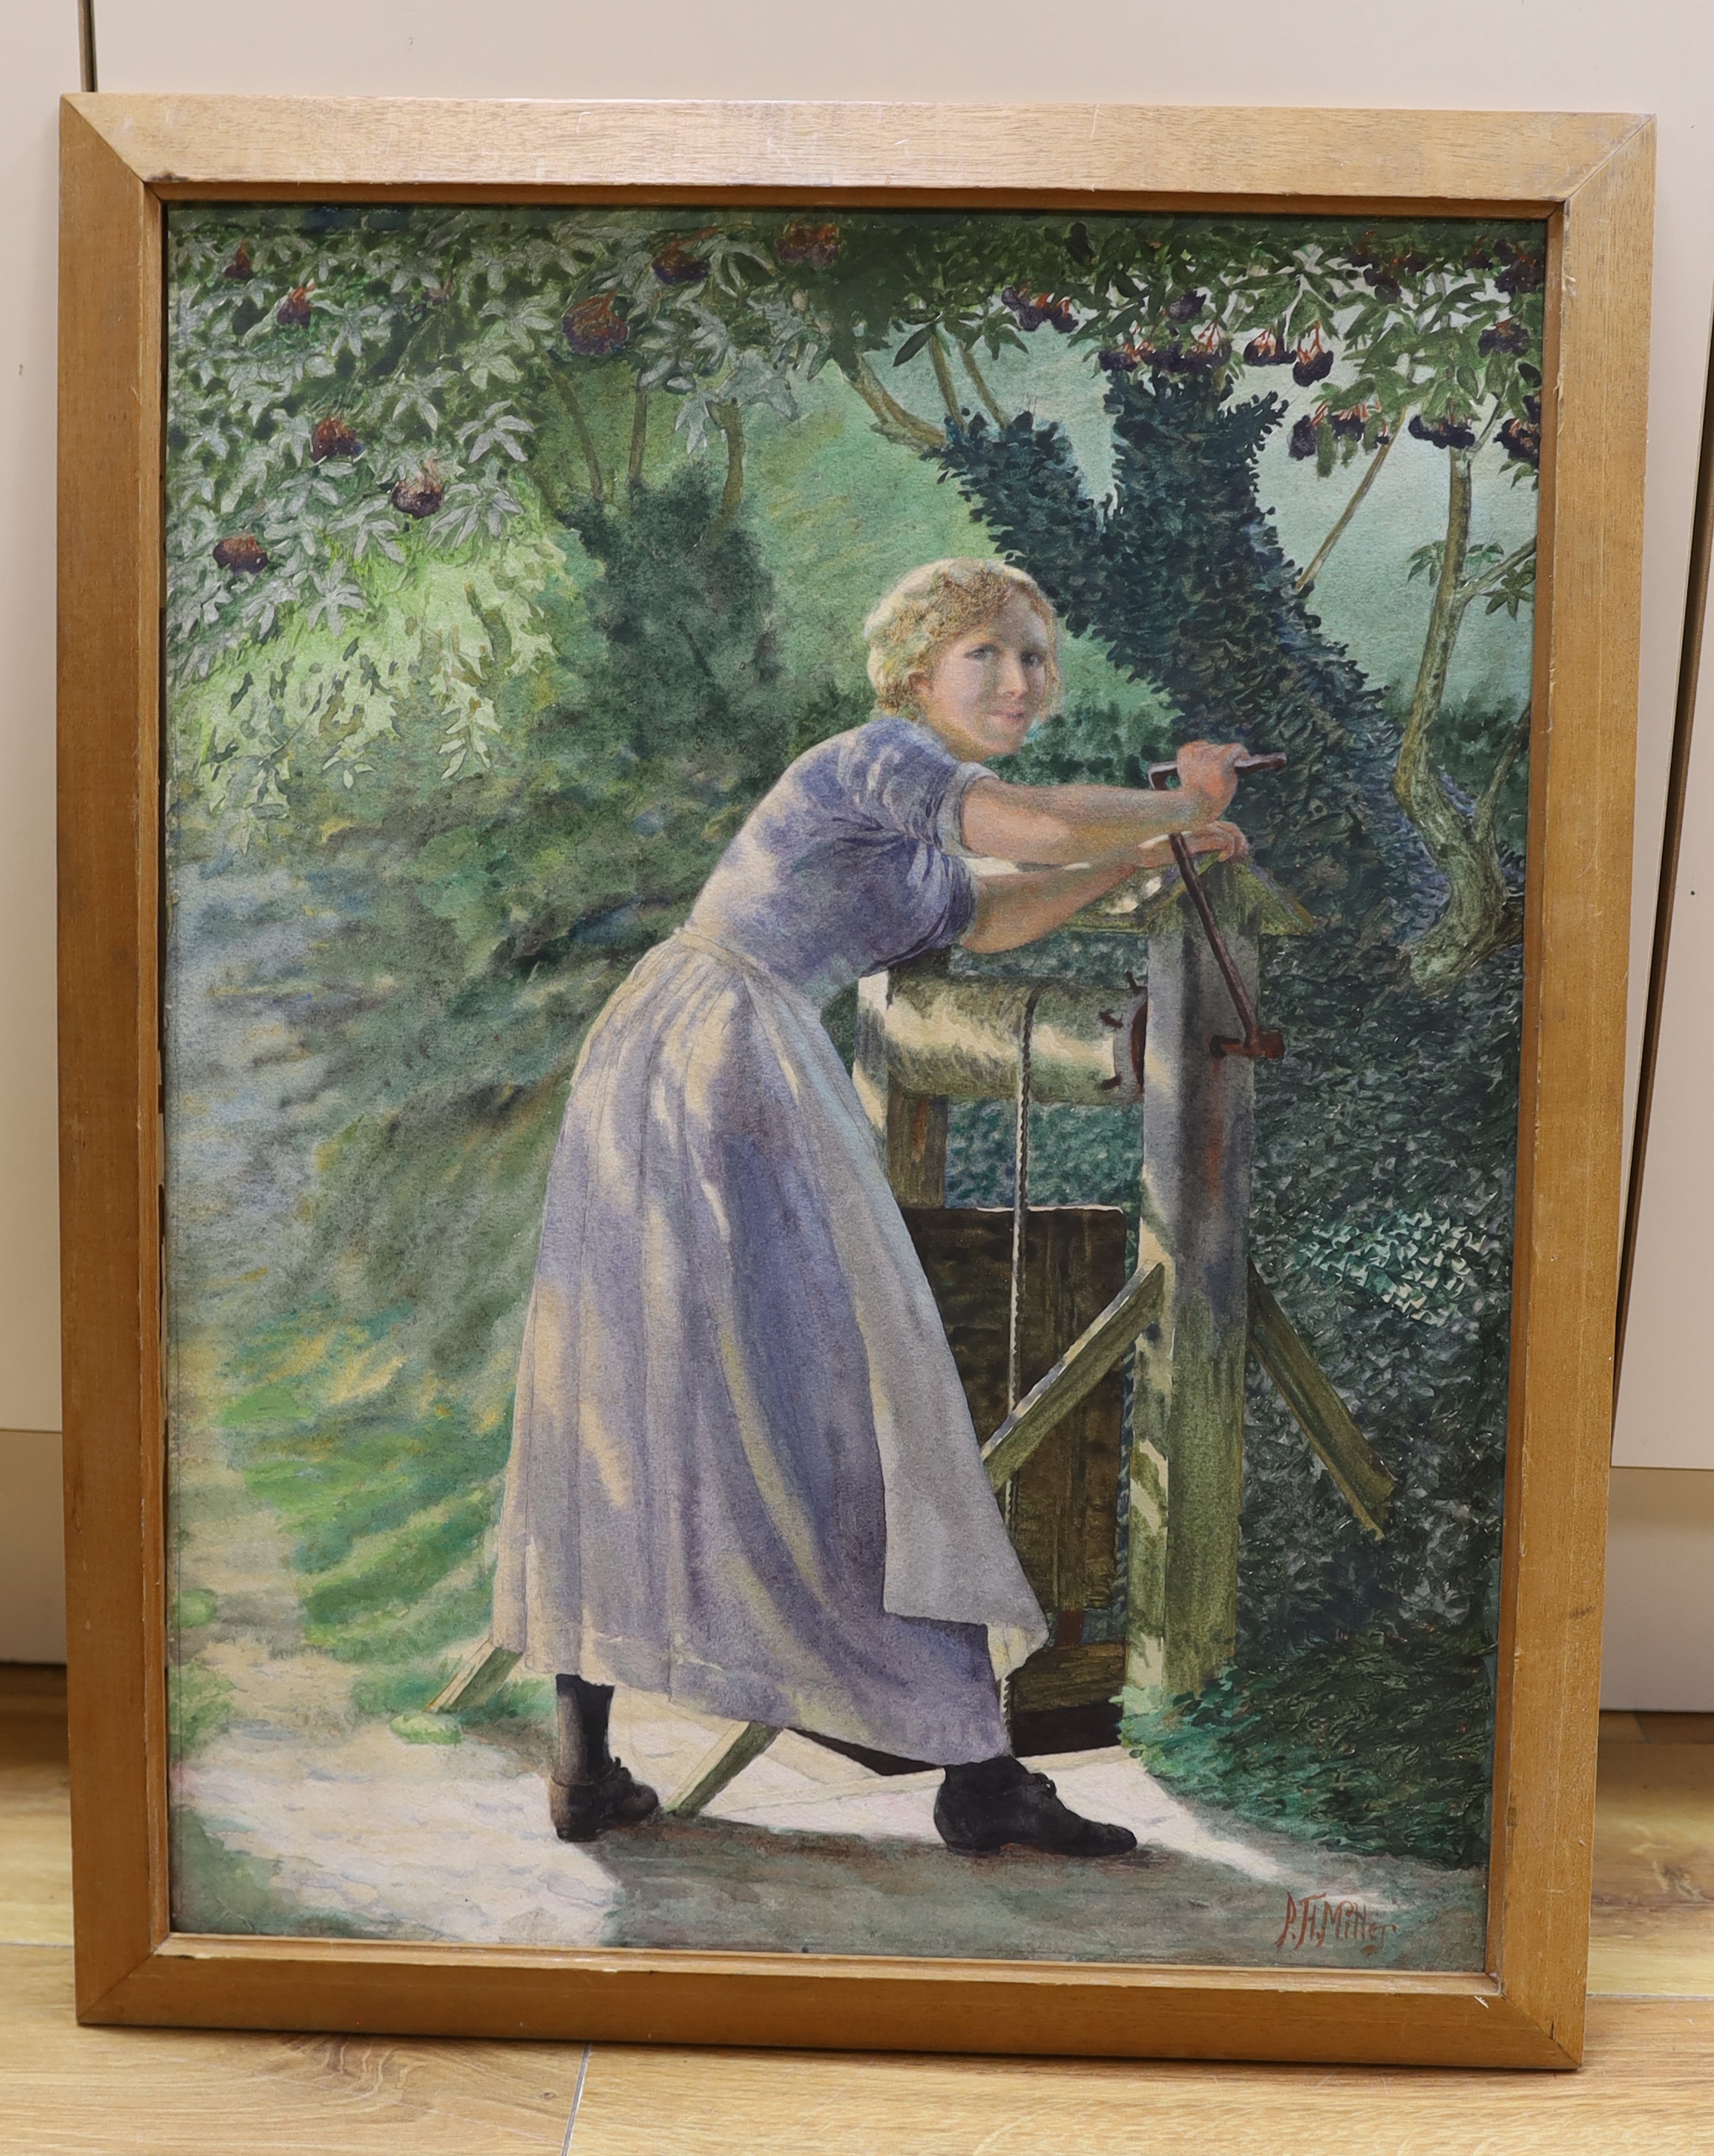 Philip Homan Miller ARHA (Irish 1845-1928), watercolour, Woman at a well, signed, 54 x 41cm